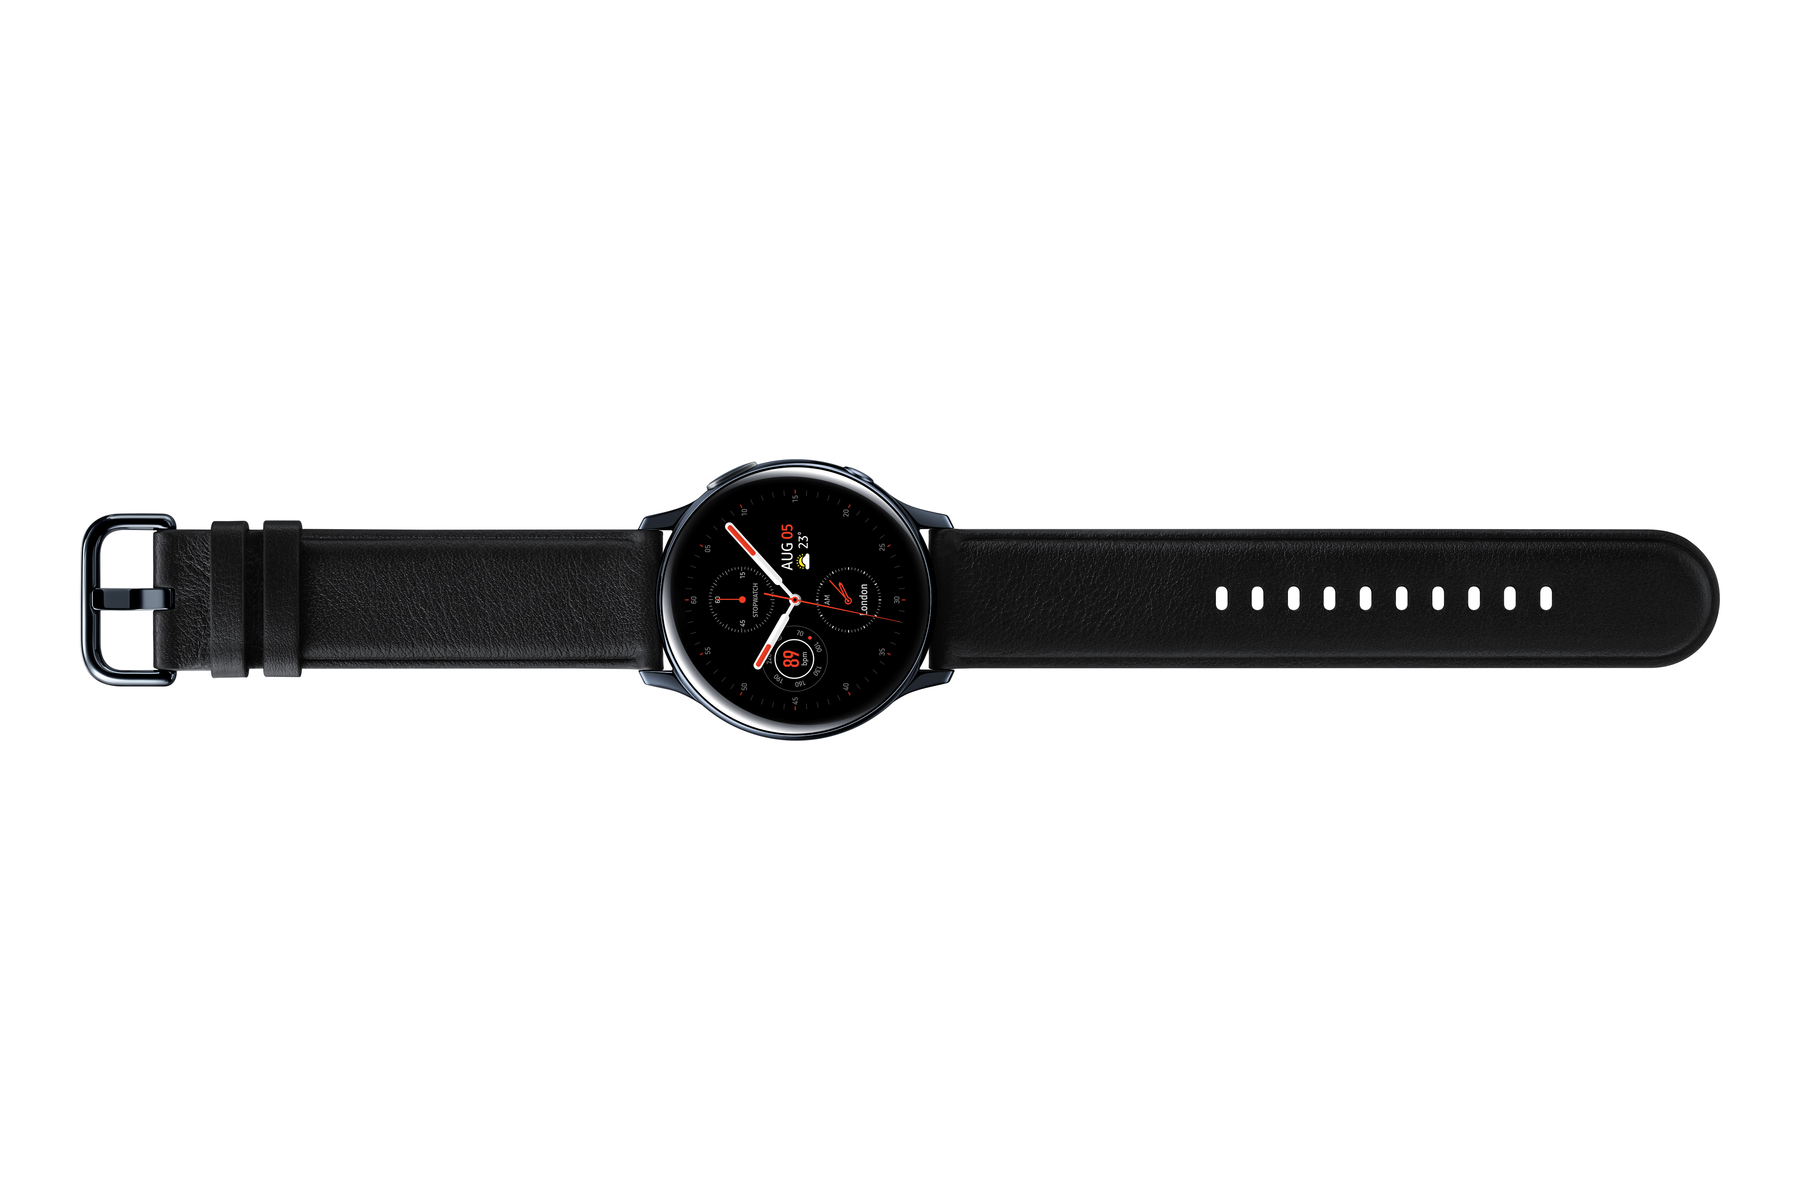 Active Smartwatch Galaxy schwarz 2 SAMSUNG Watch Silikon,